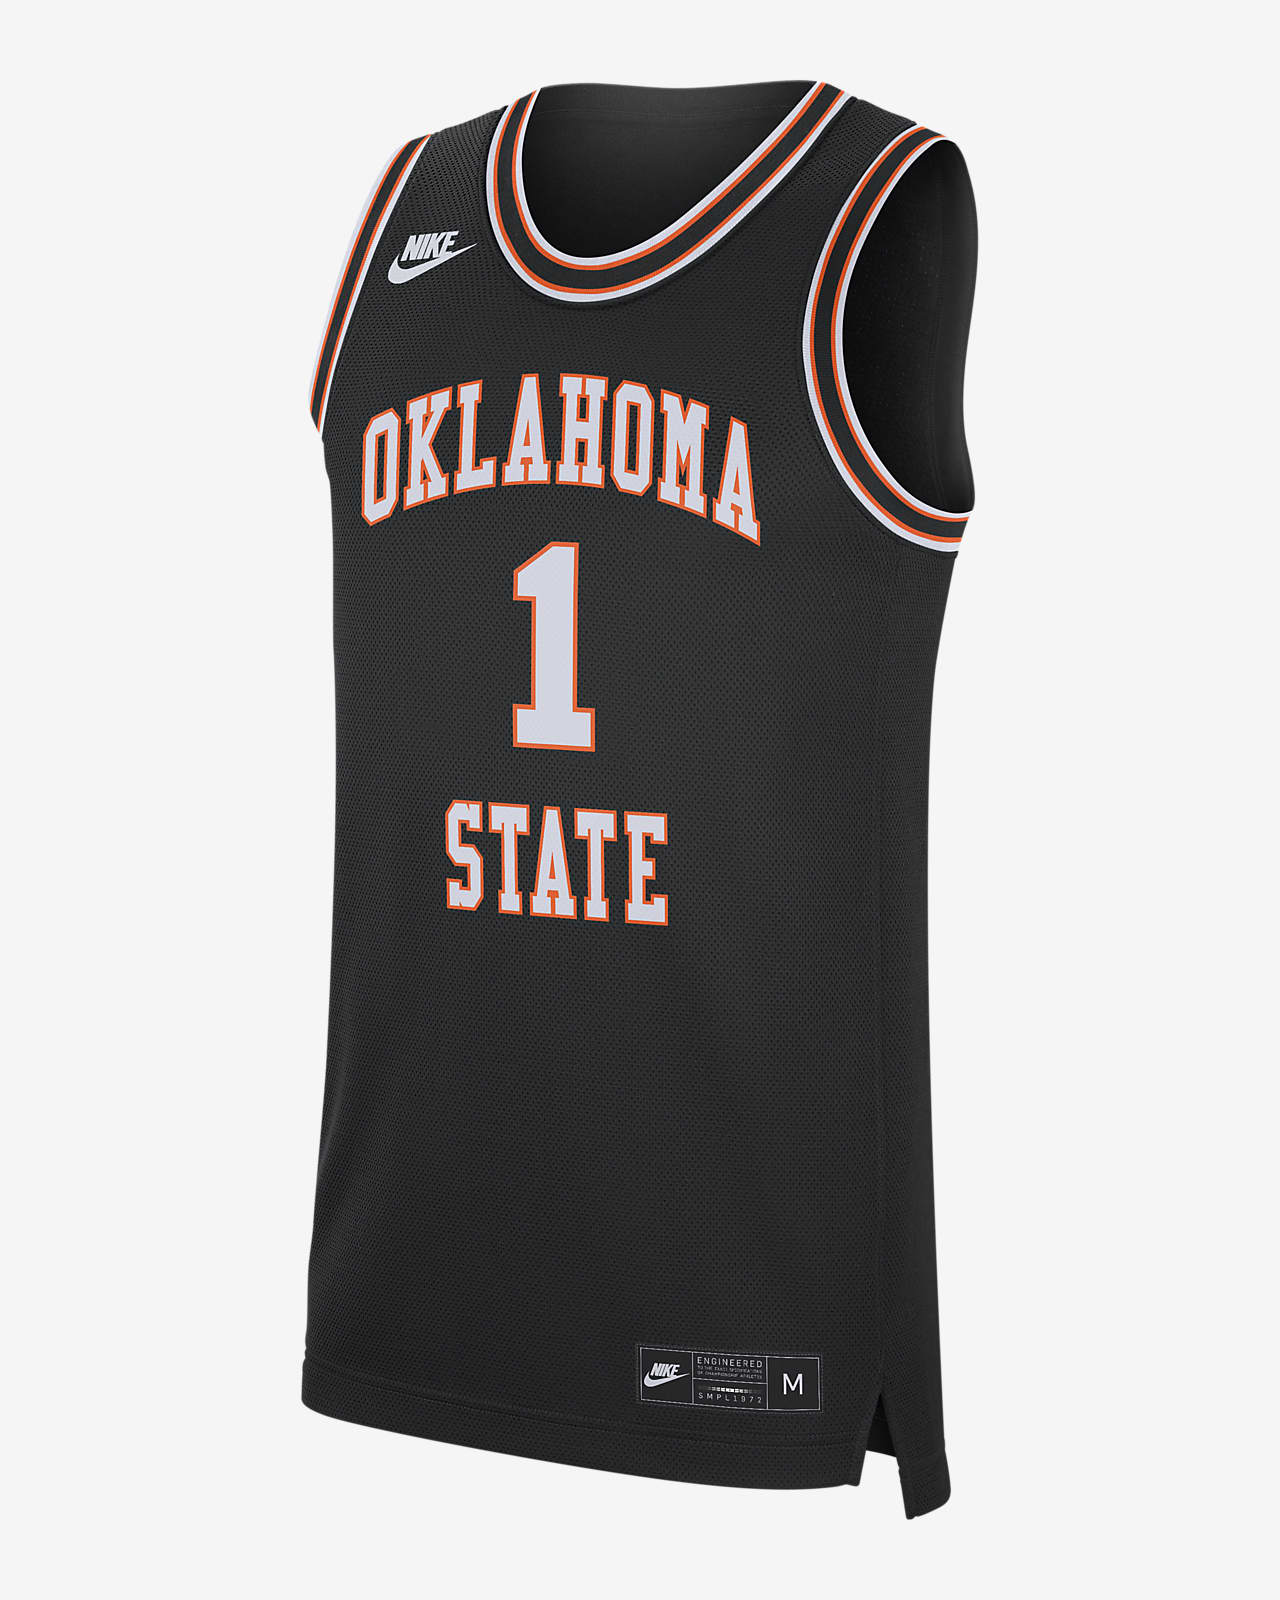 Nike College Dri-FIT (Oklahoma State) Men's Replica Basketball Jersey